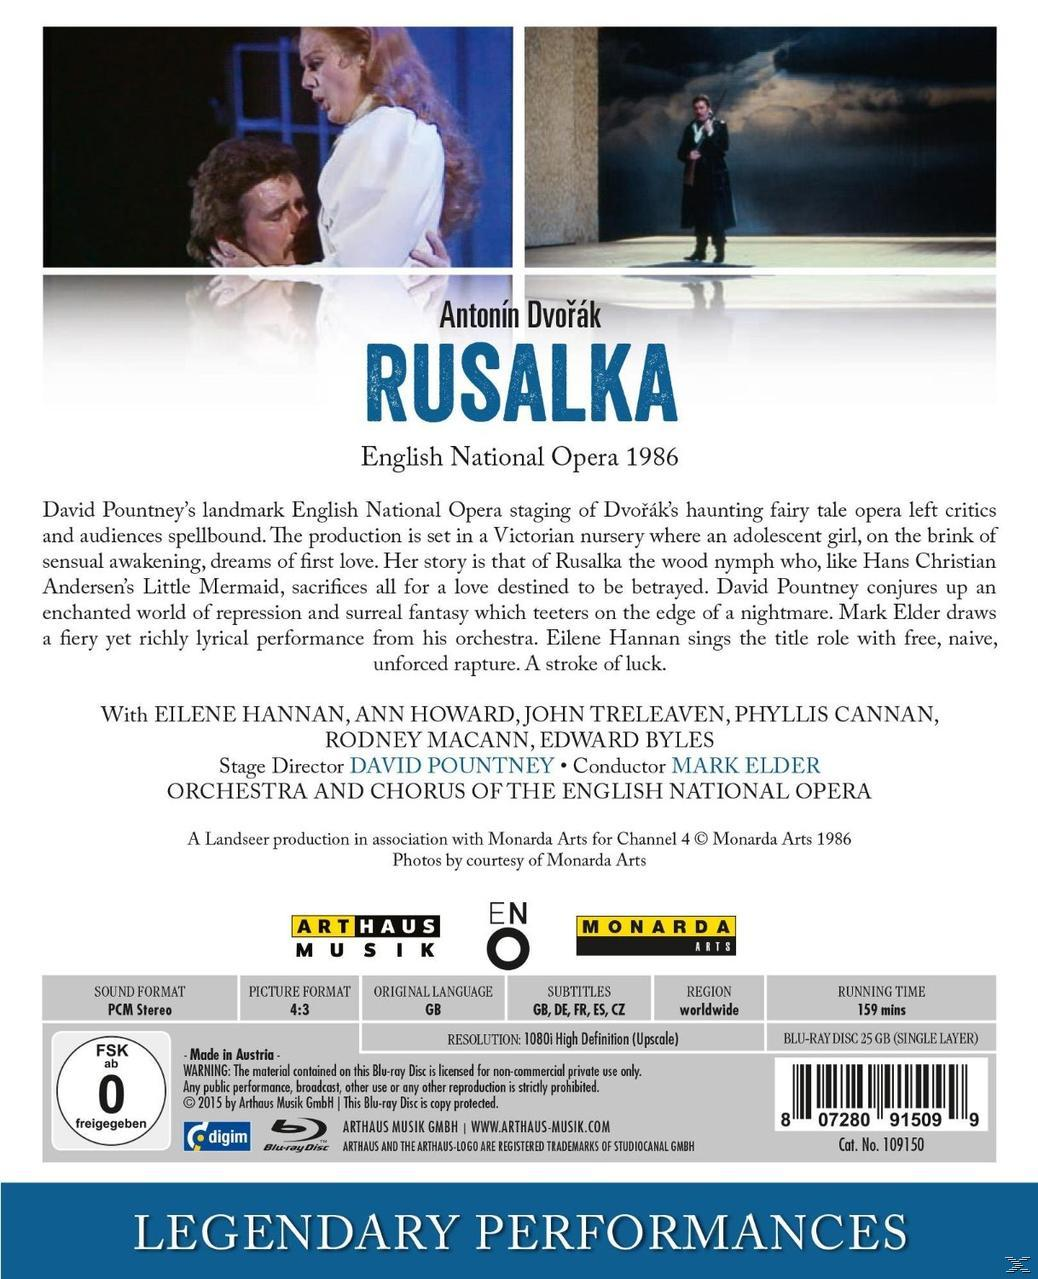 Eilene Hannan, Ann Howard - (Blu-ray) - Rusalka